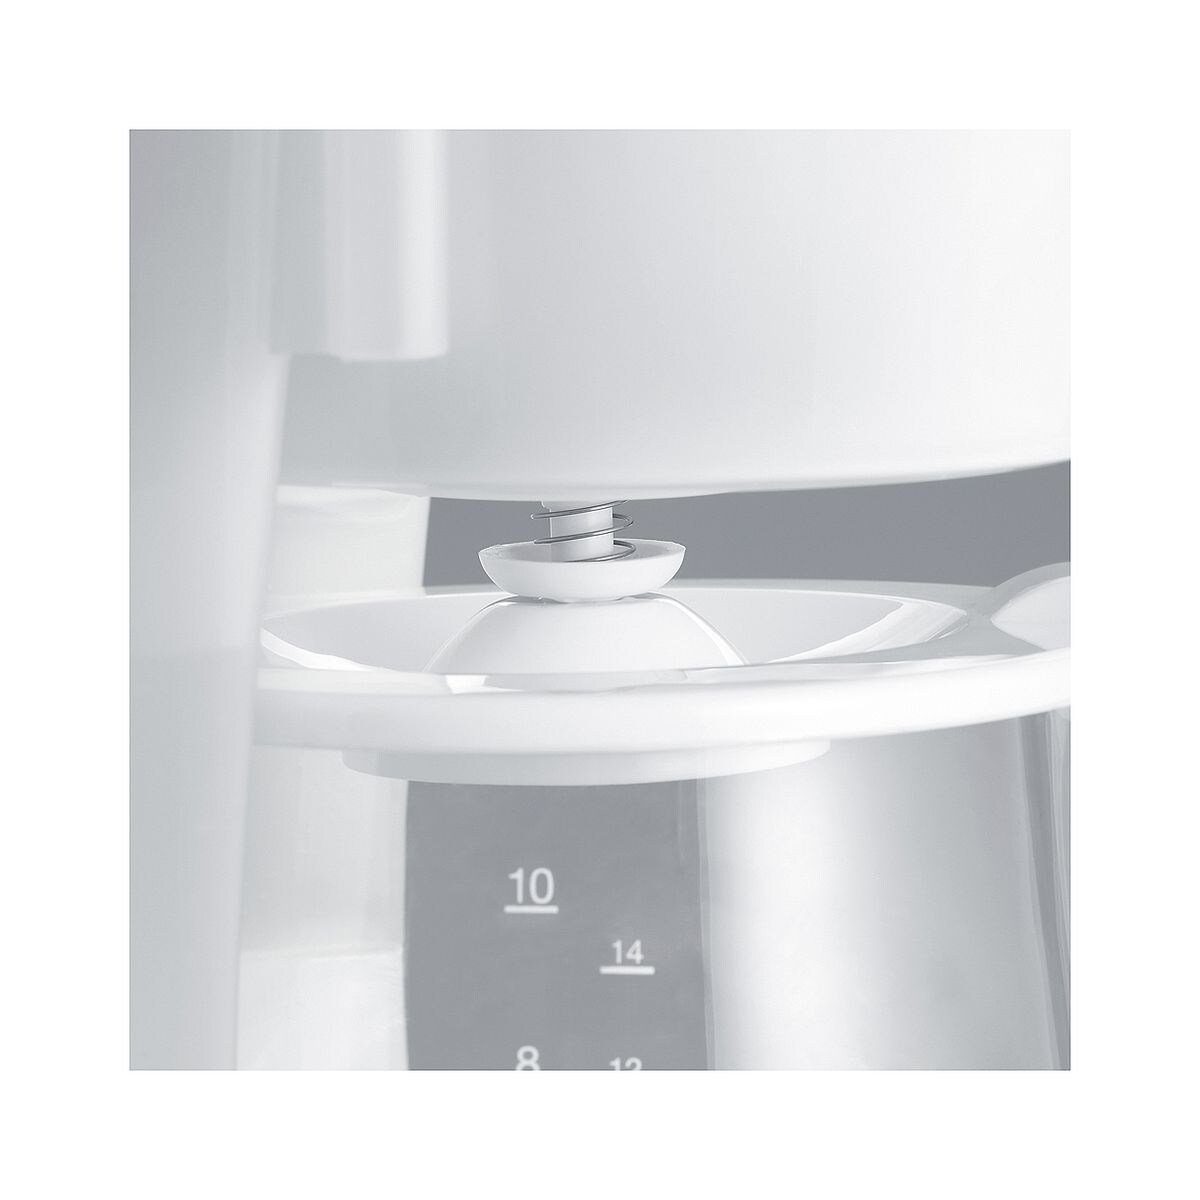 Severin Filterkaffeemaschine KA 4478, Tassen, bis 1.4l 800 mit Glaskanne, 10 weiß Kaffeekanne, Watt 1x4